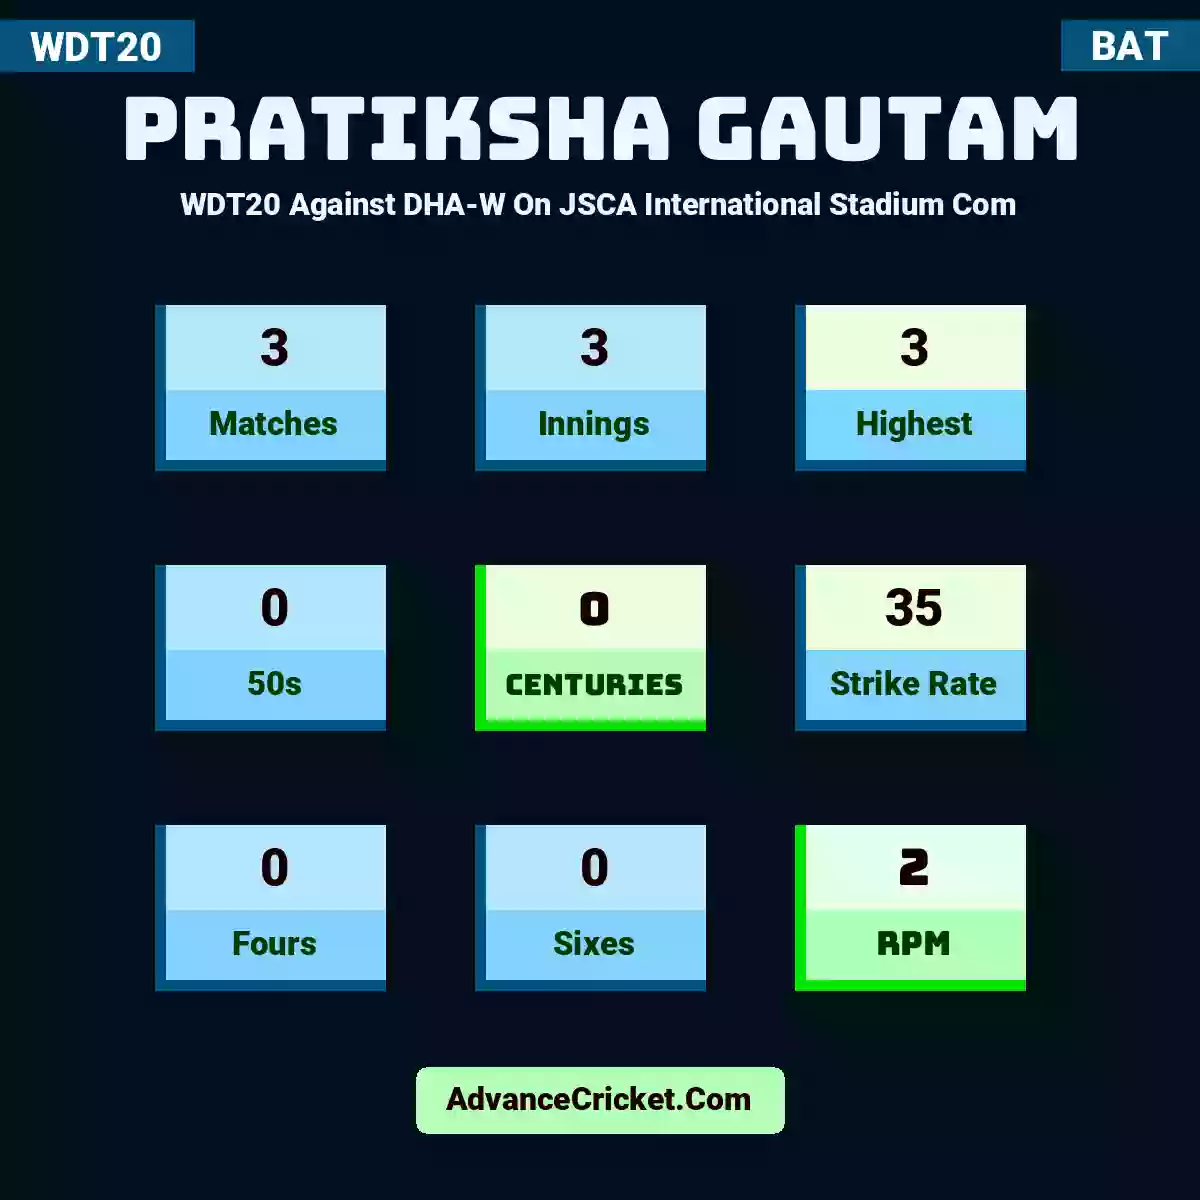 Pratiksha Gautam WDT20  Against DHA-W On JSCA International Stadium Com, Pratiksha Gautam played 3 matches, scored 3 runs as highest, 0 half-centuries, and 0 centuries, with a strike rate of 35. P.Gautam hit 0 fours and 0 sixes, with an RPM of 2.